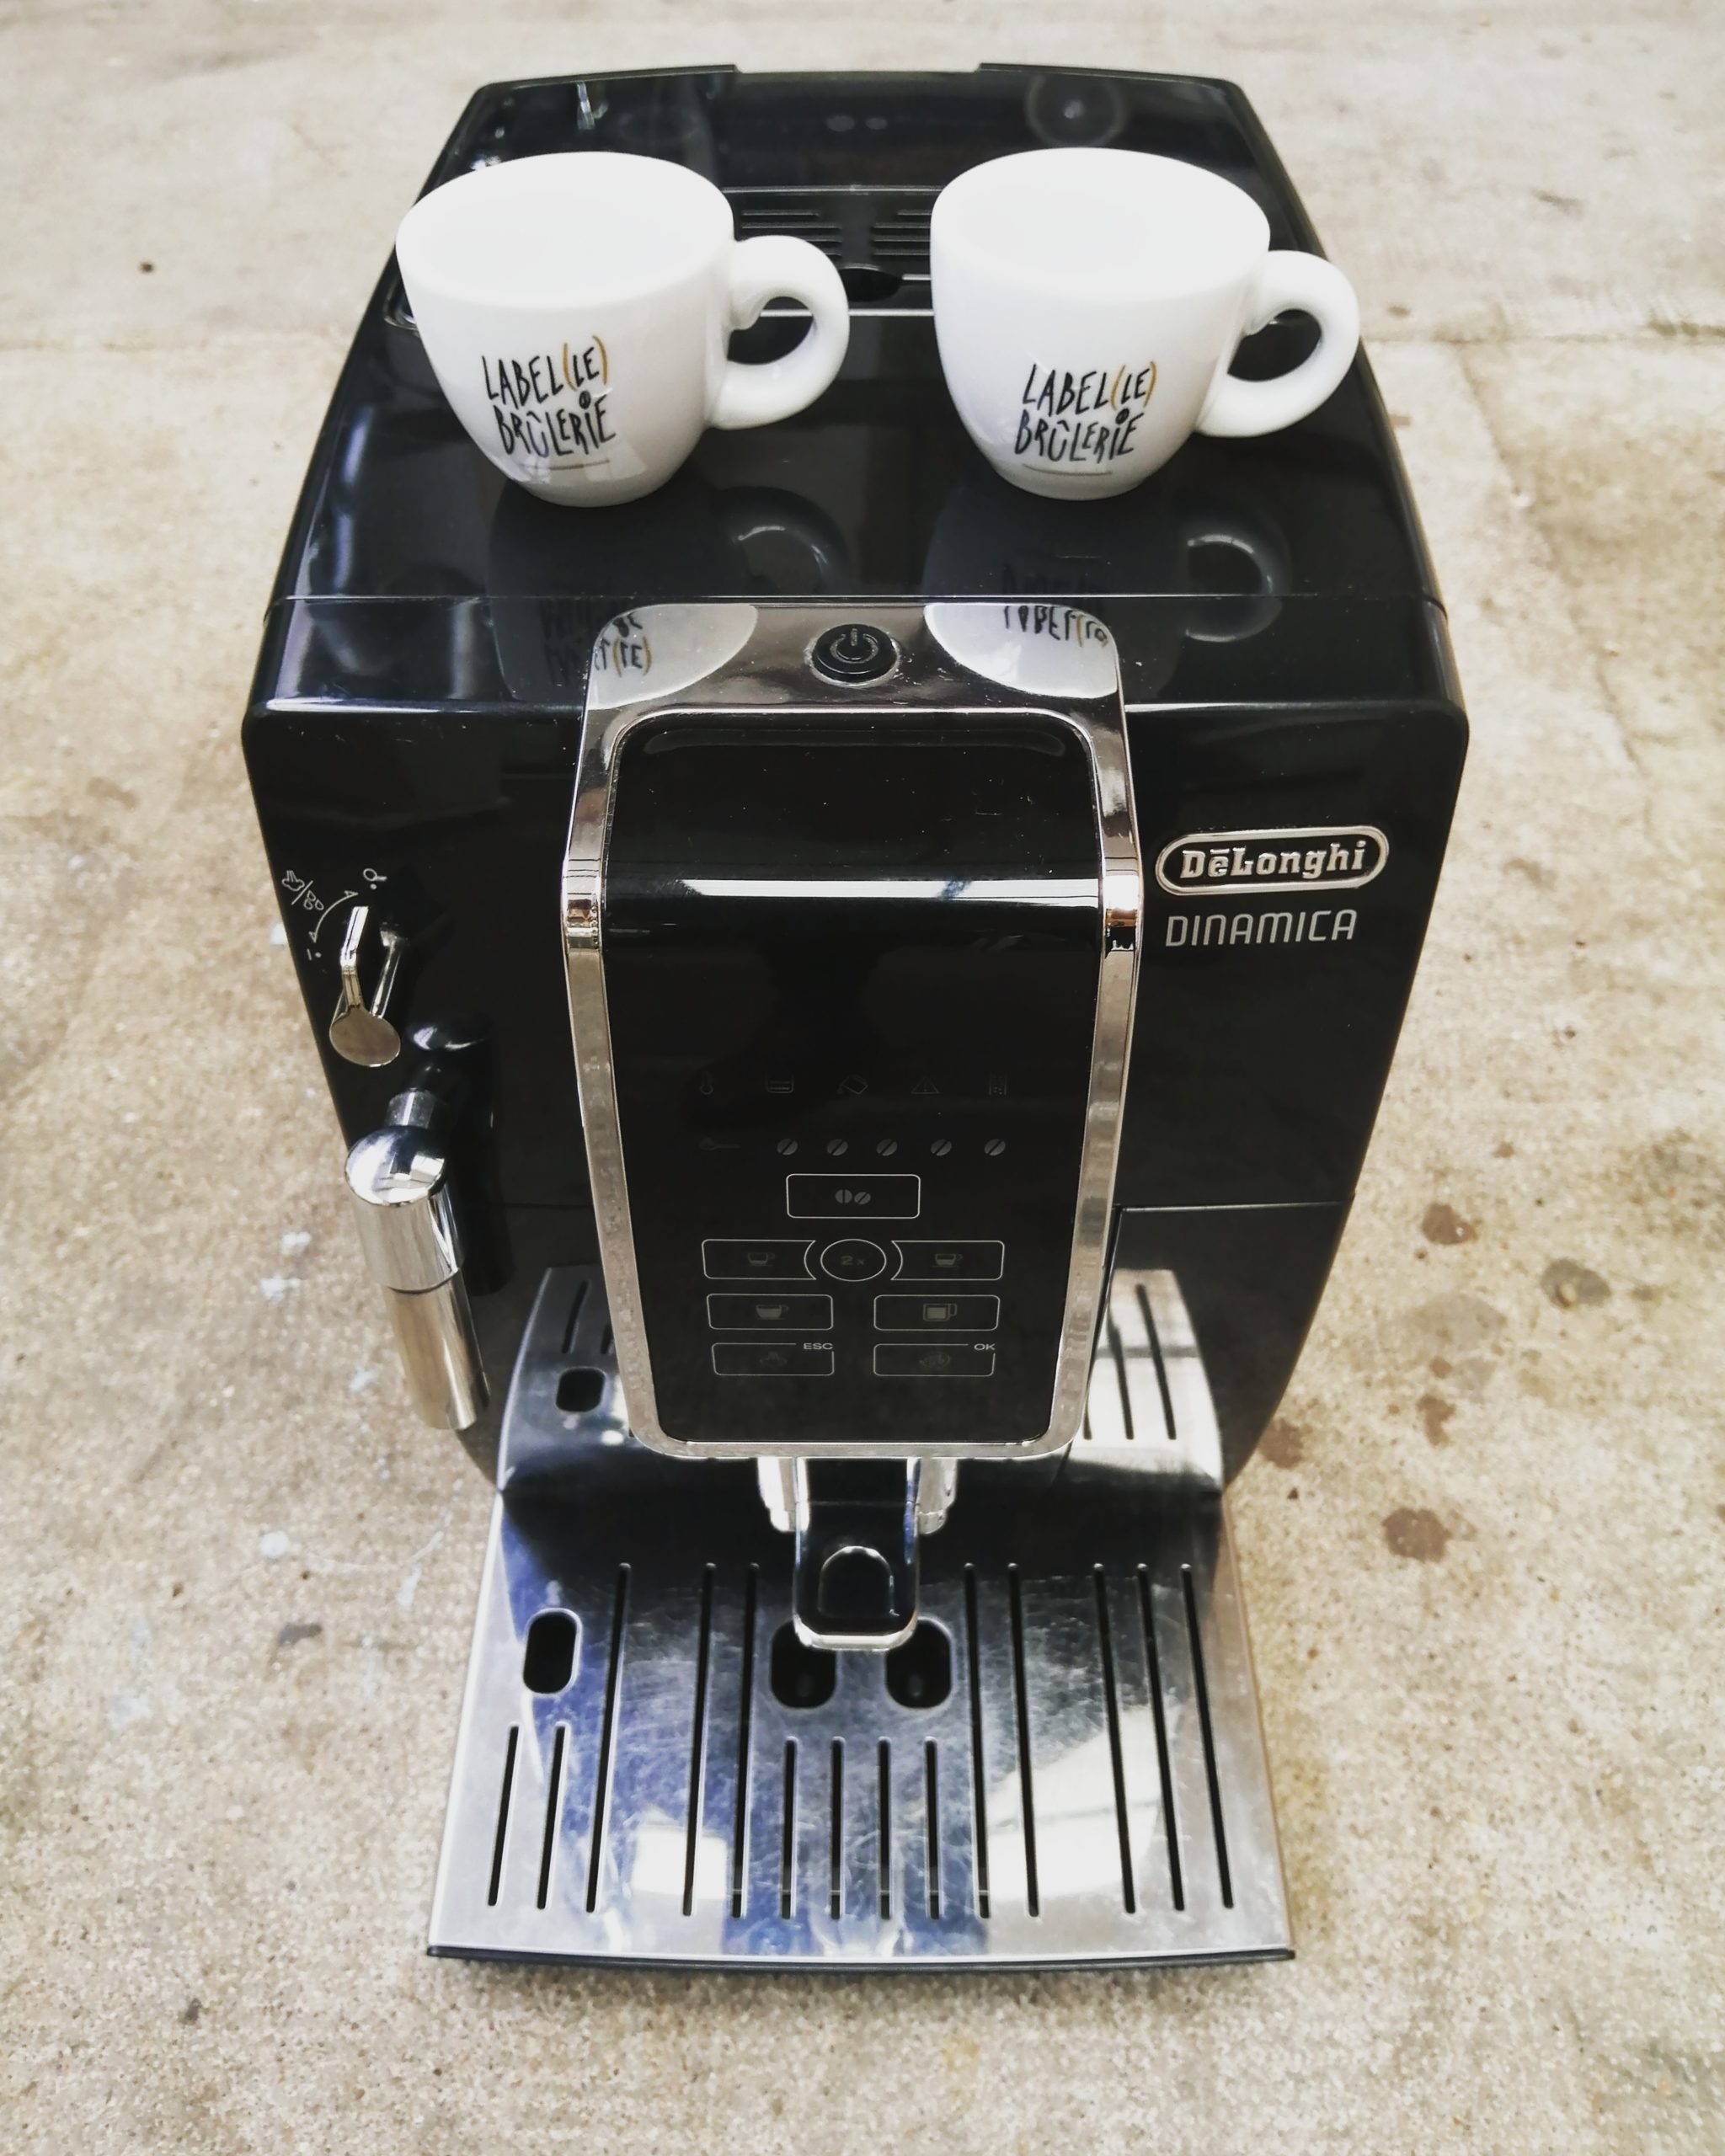 Machine à espresso Delonghi 3515 - Label(le) Brûlerie